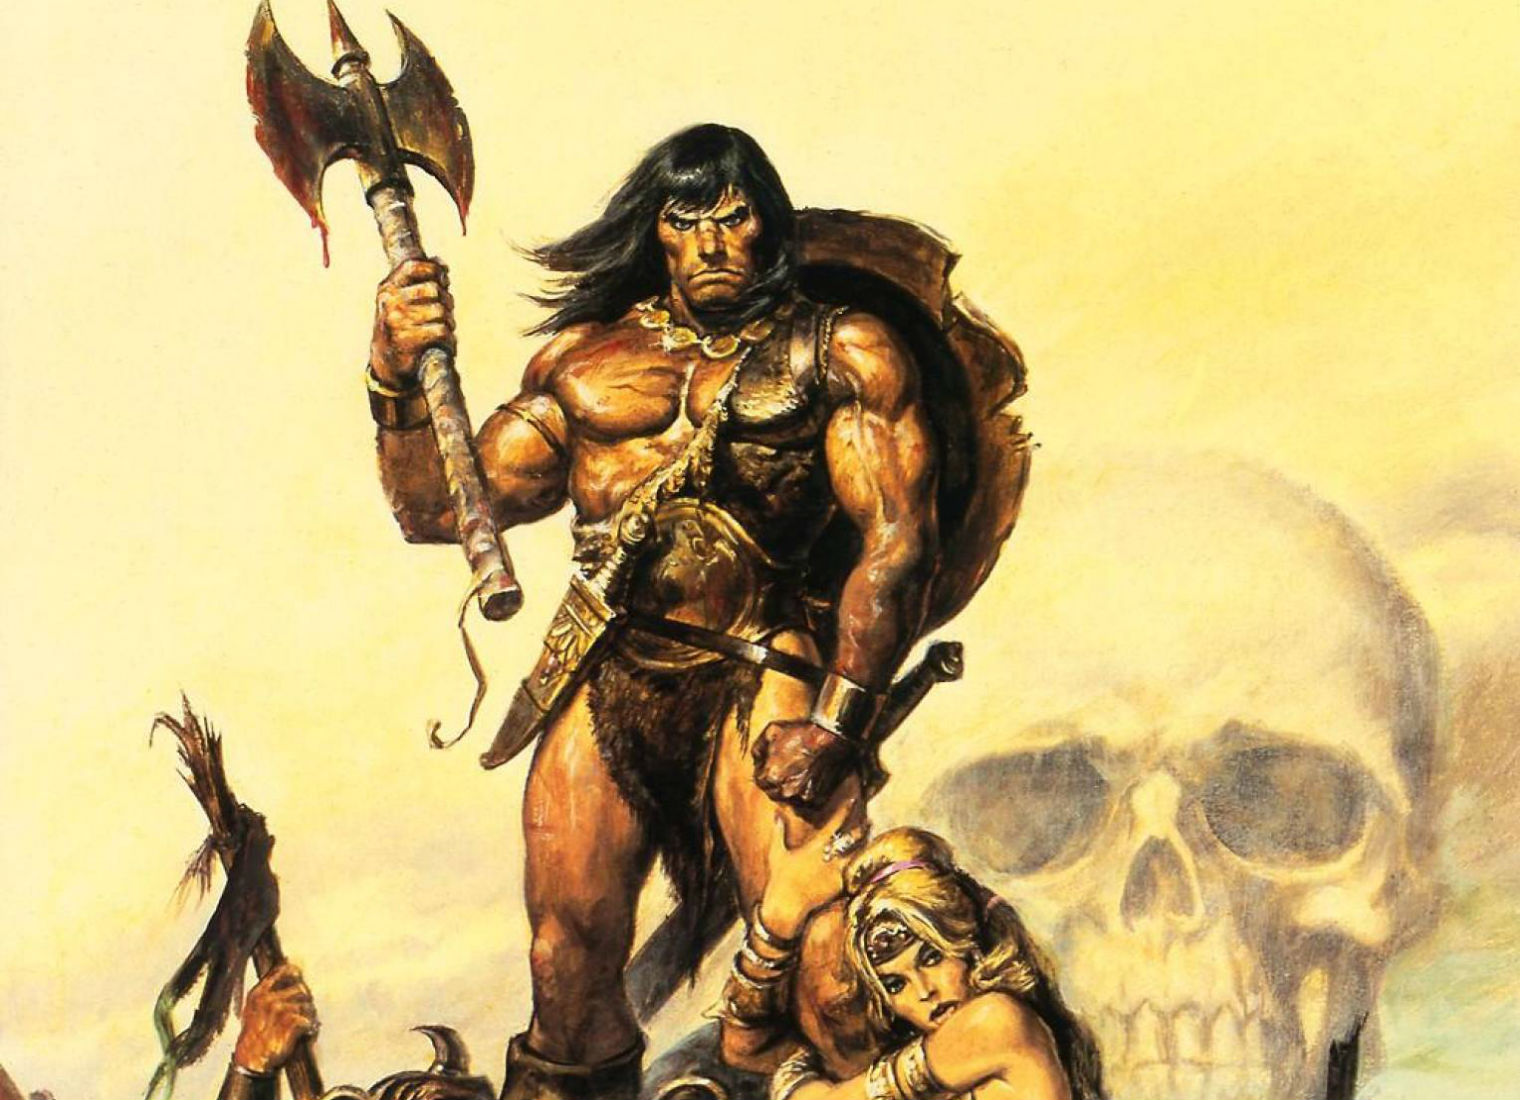 Conan The Barbarian Art - wallpaper.